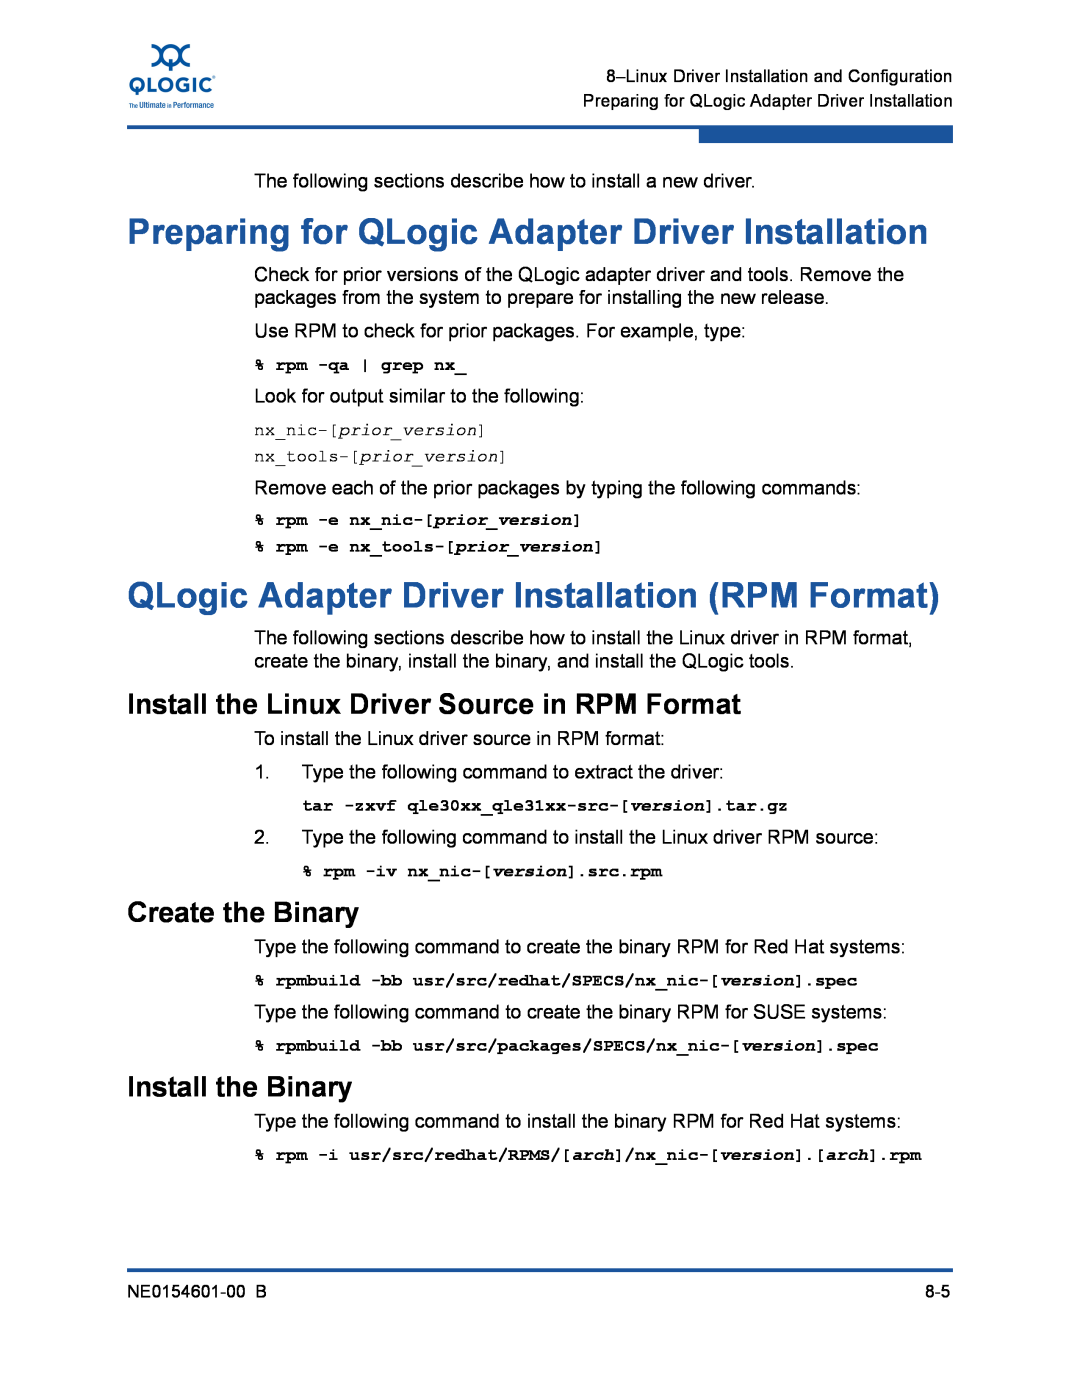 Q-Logic 3000, 3100 manual Preparing for QLogic Adapter Driver Installation, QLogic Adapter Driver Installation RPM Format 